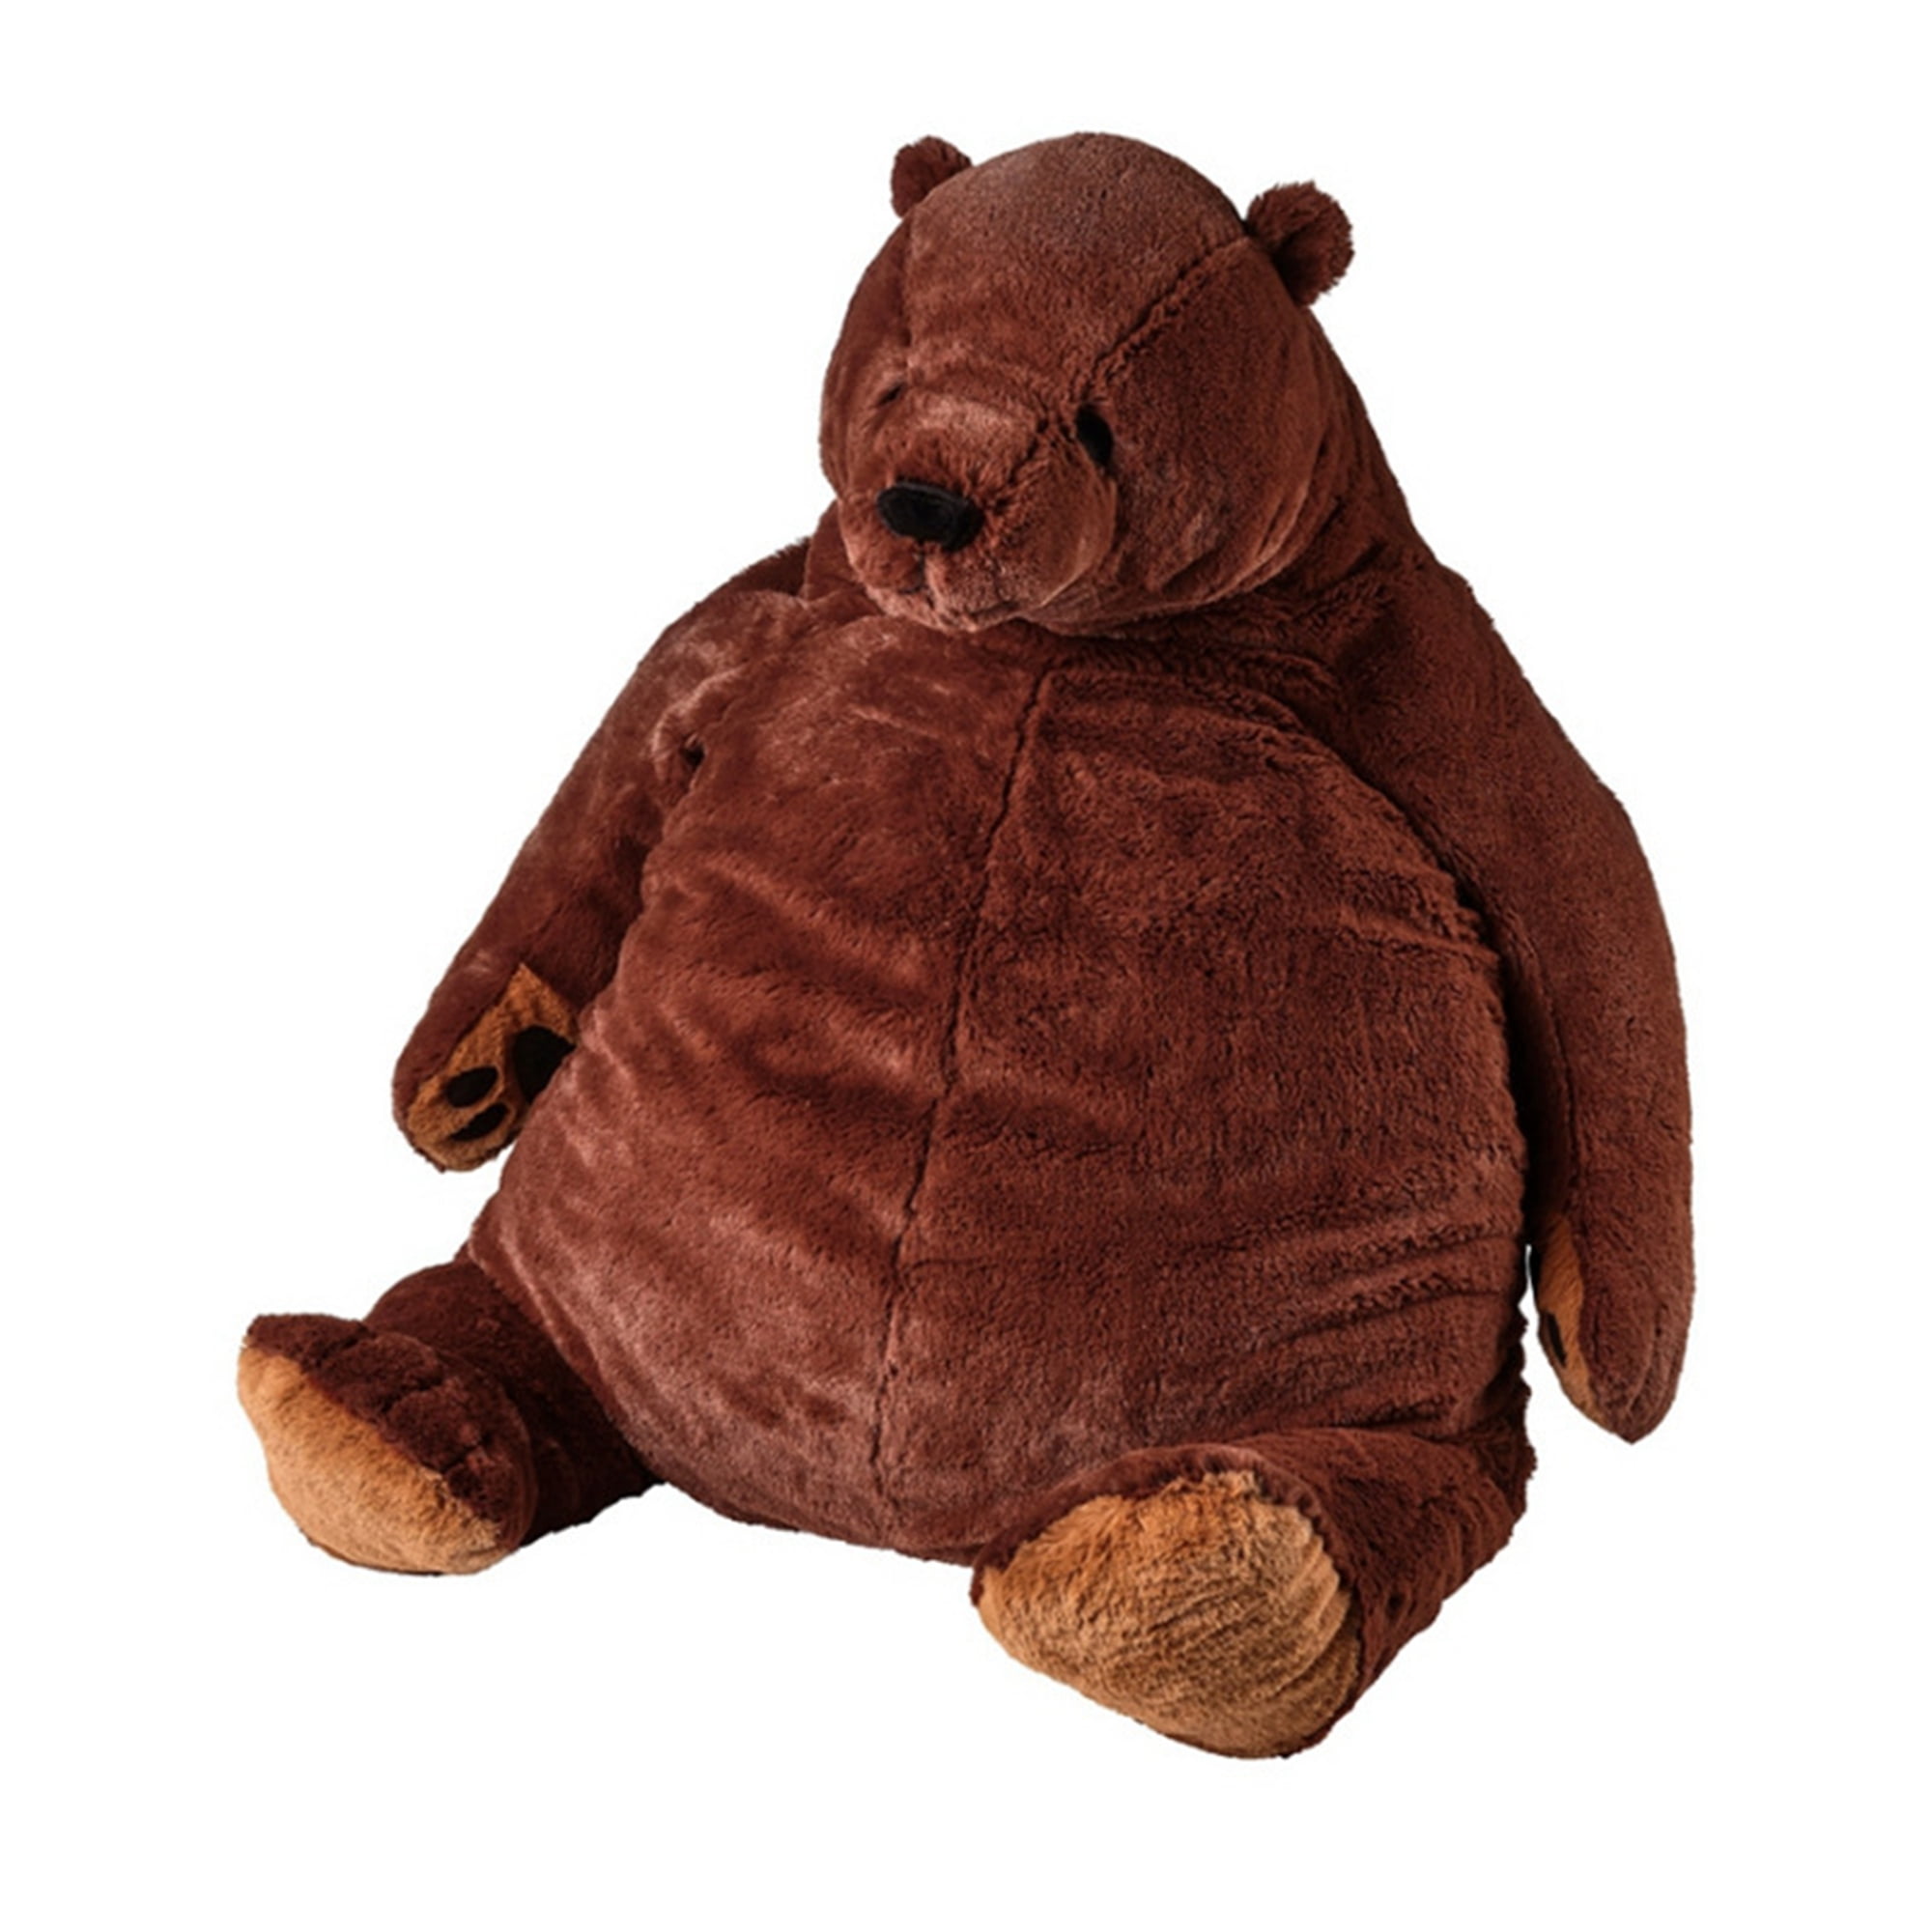 Giant Brown Bear Stuffed Plush Toy, Big Simulation DJUNGELSKOG Bear Soft Animal  Teddy Bear Plush Doll Cuddling Pillow Home Decor Valentine's Day Birthday  Gift 